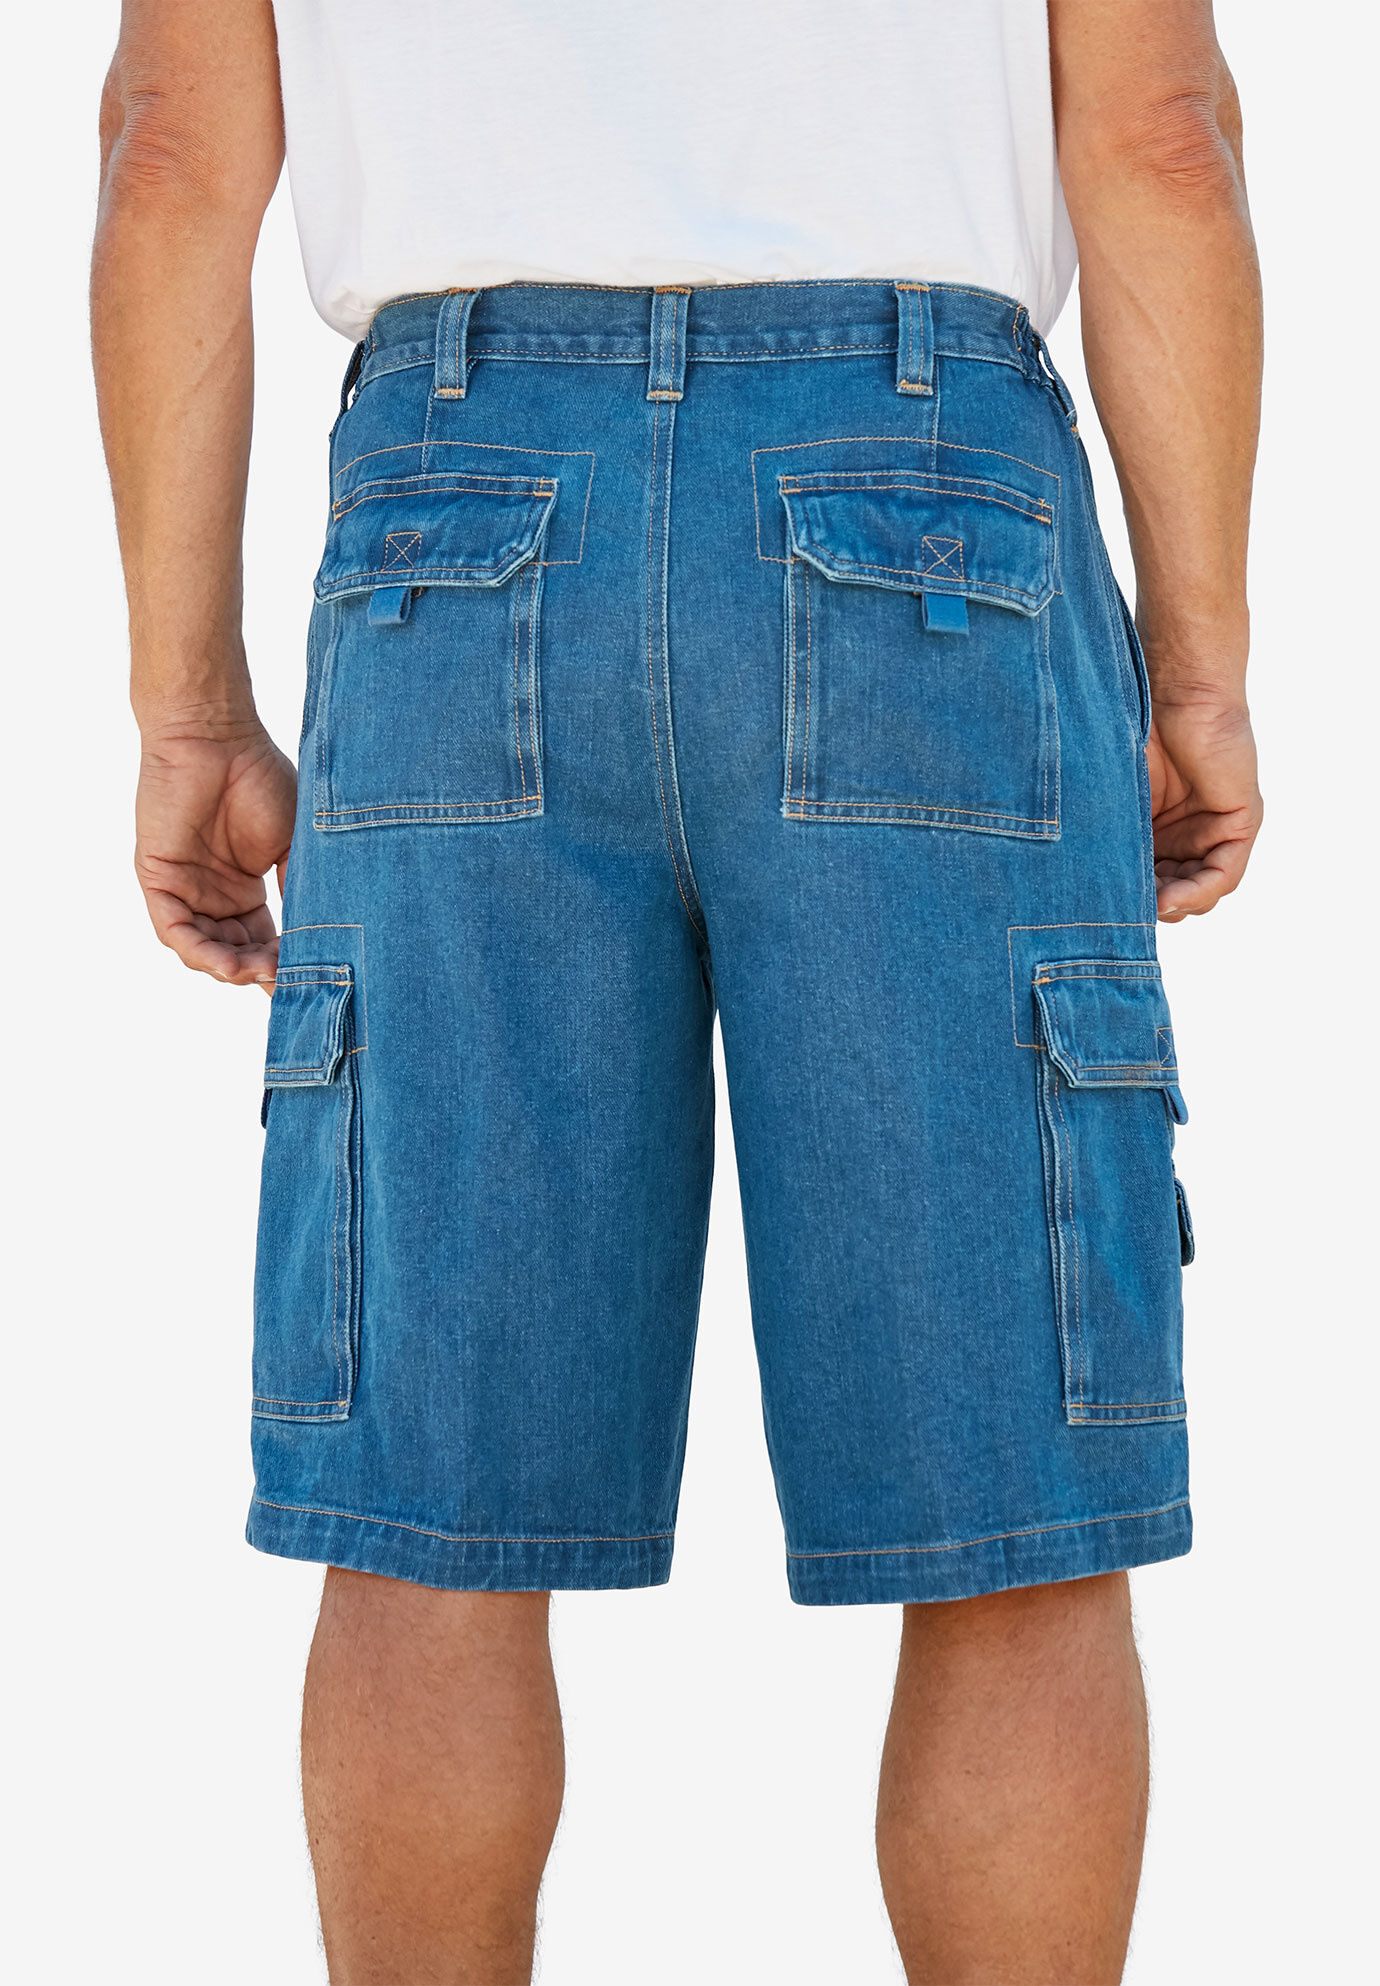 jean cargo shorts